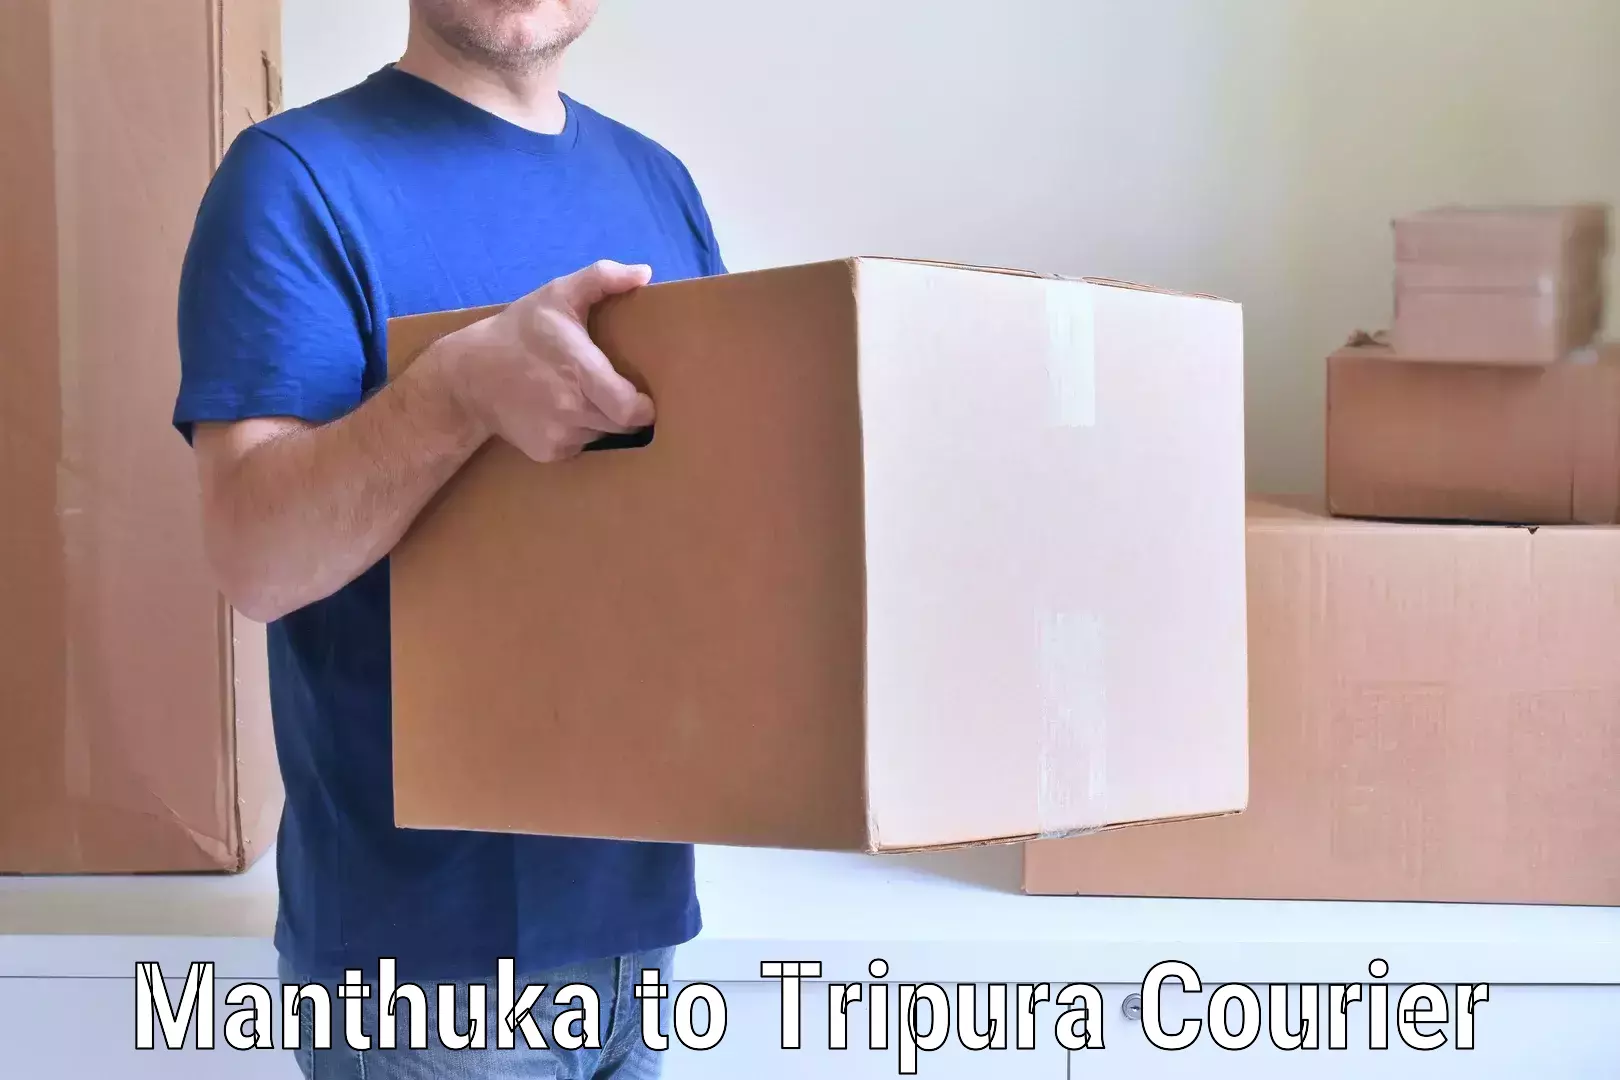 Moving and packing experts Manthuka to Tripura